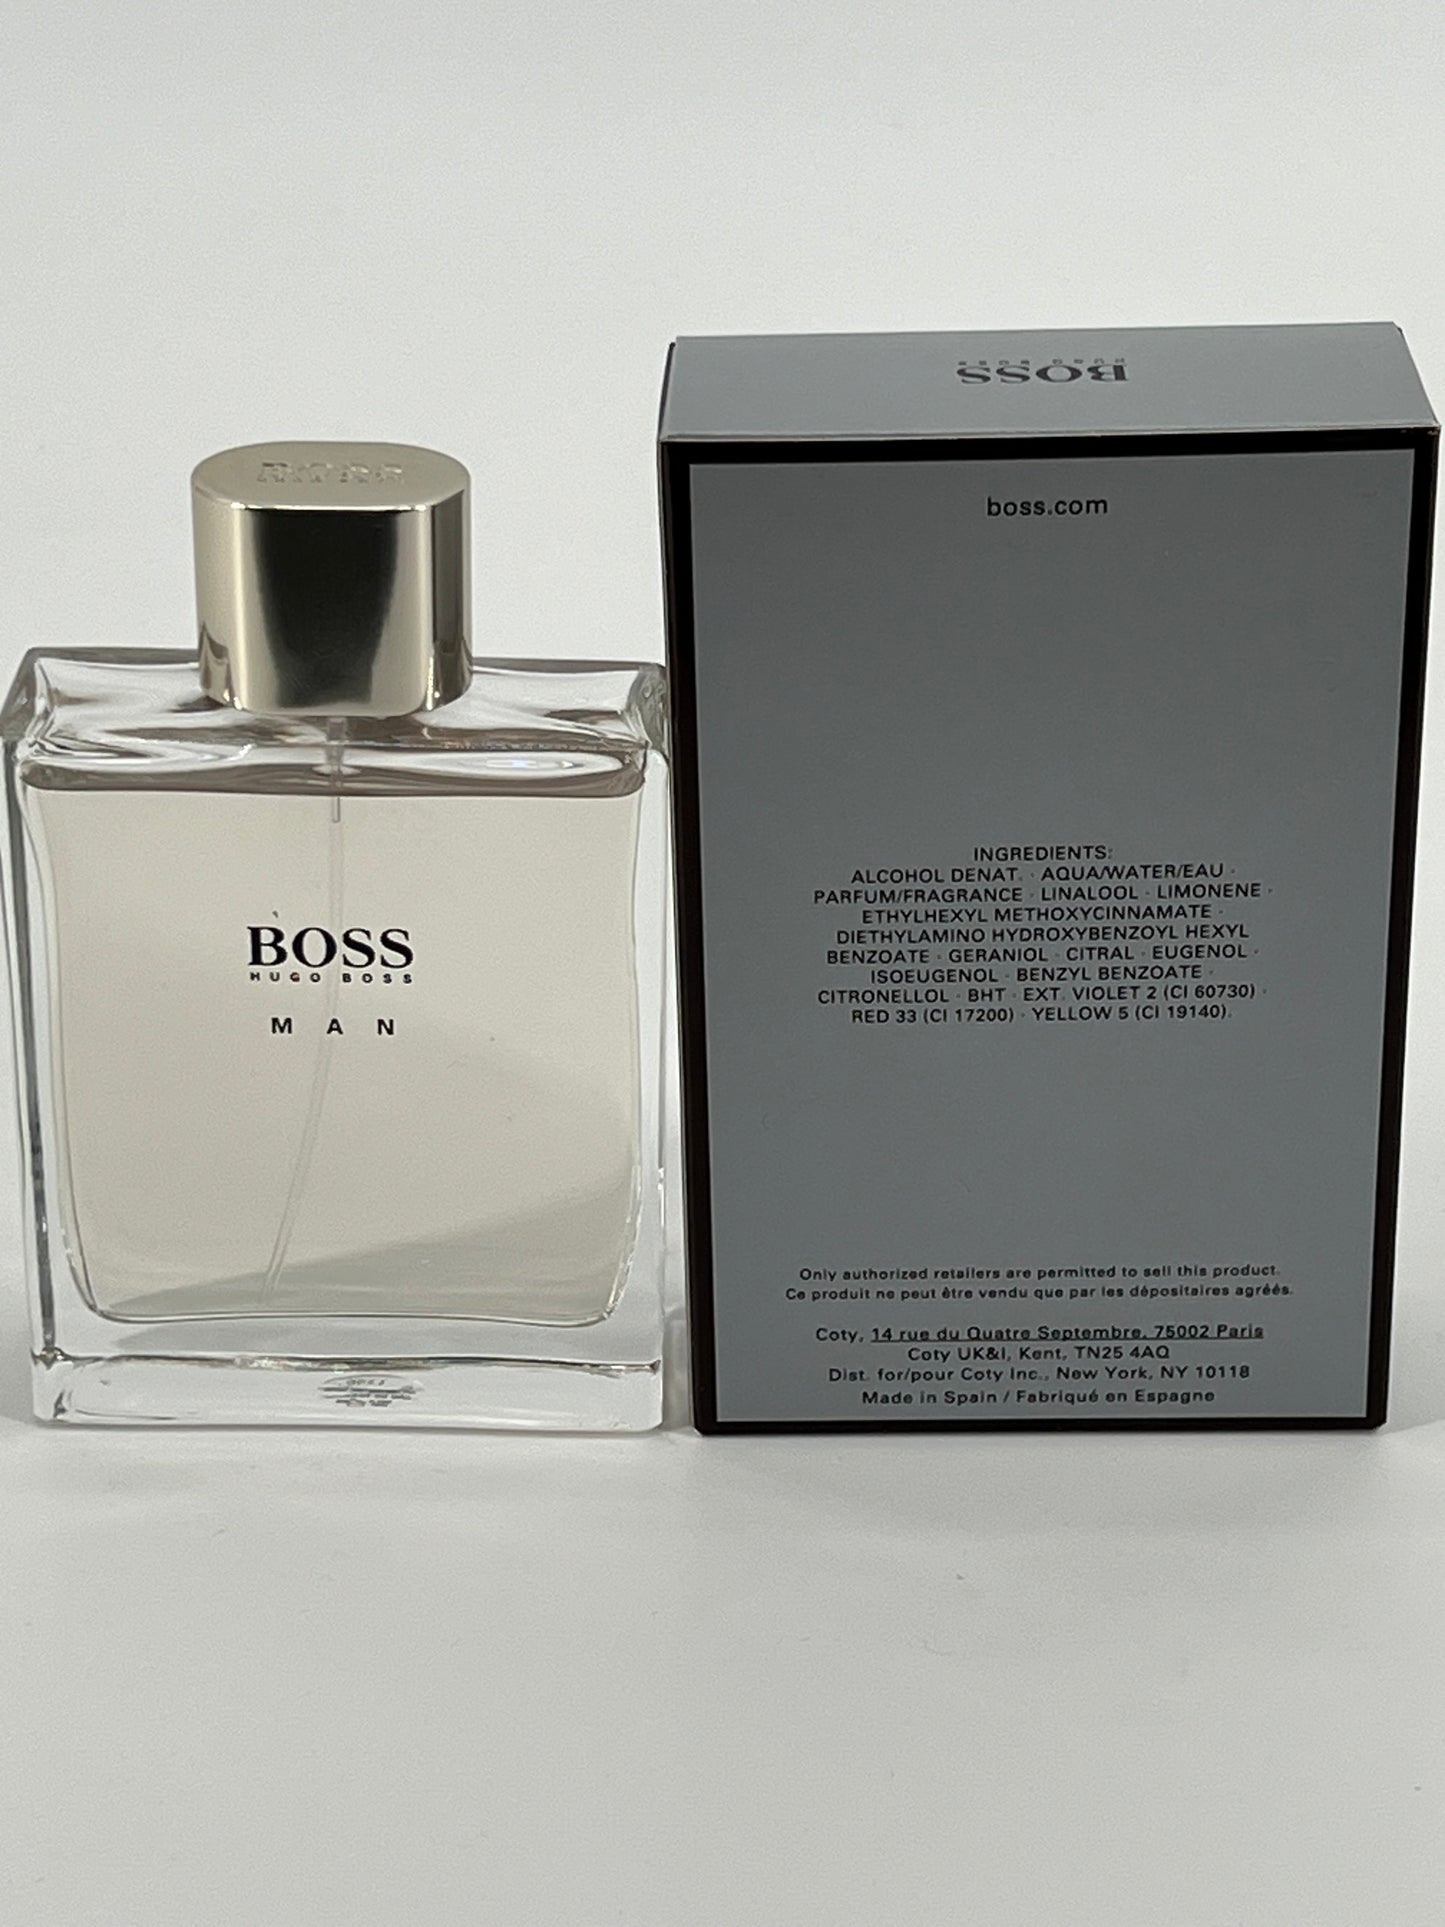 HUGO BOSS - Parfum man